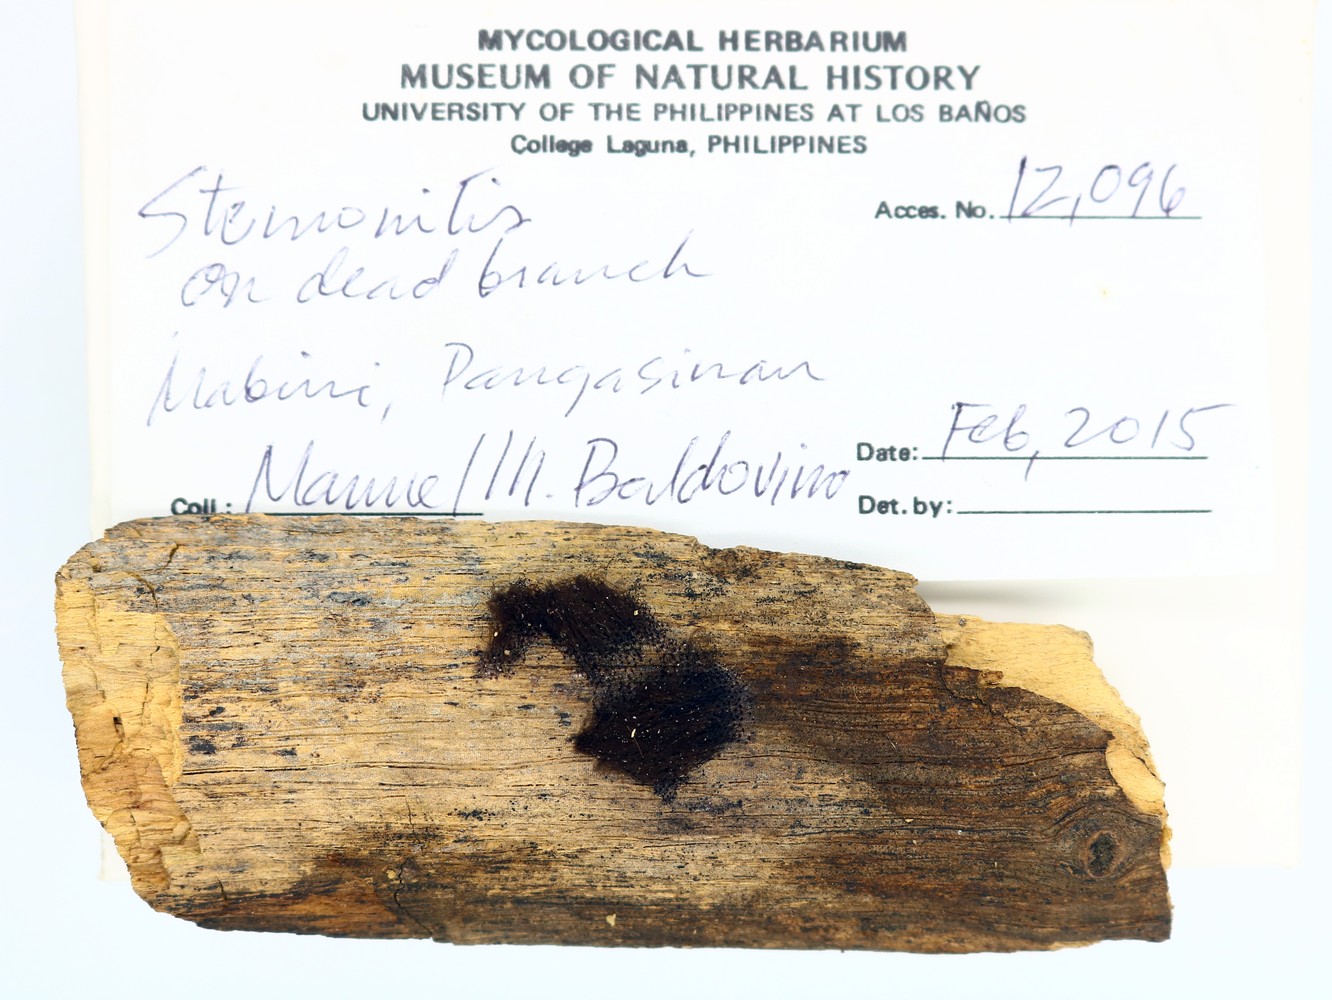 MNH-mycological-herbarium-01